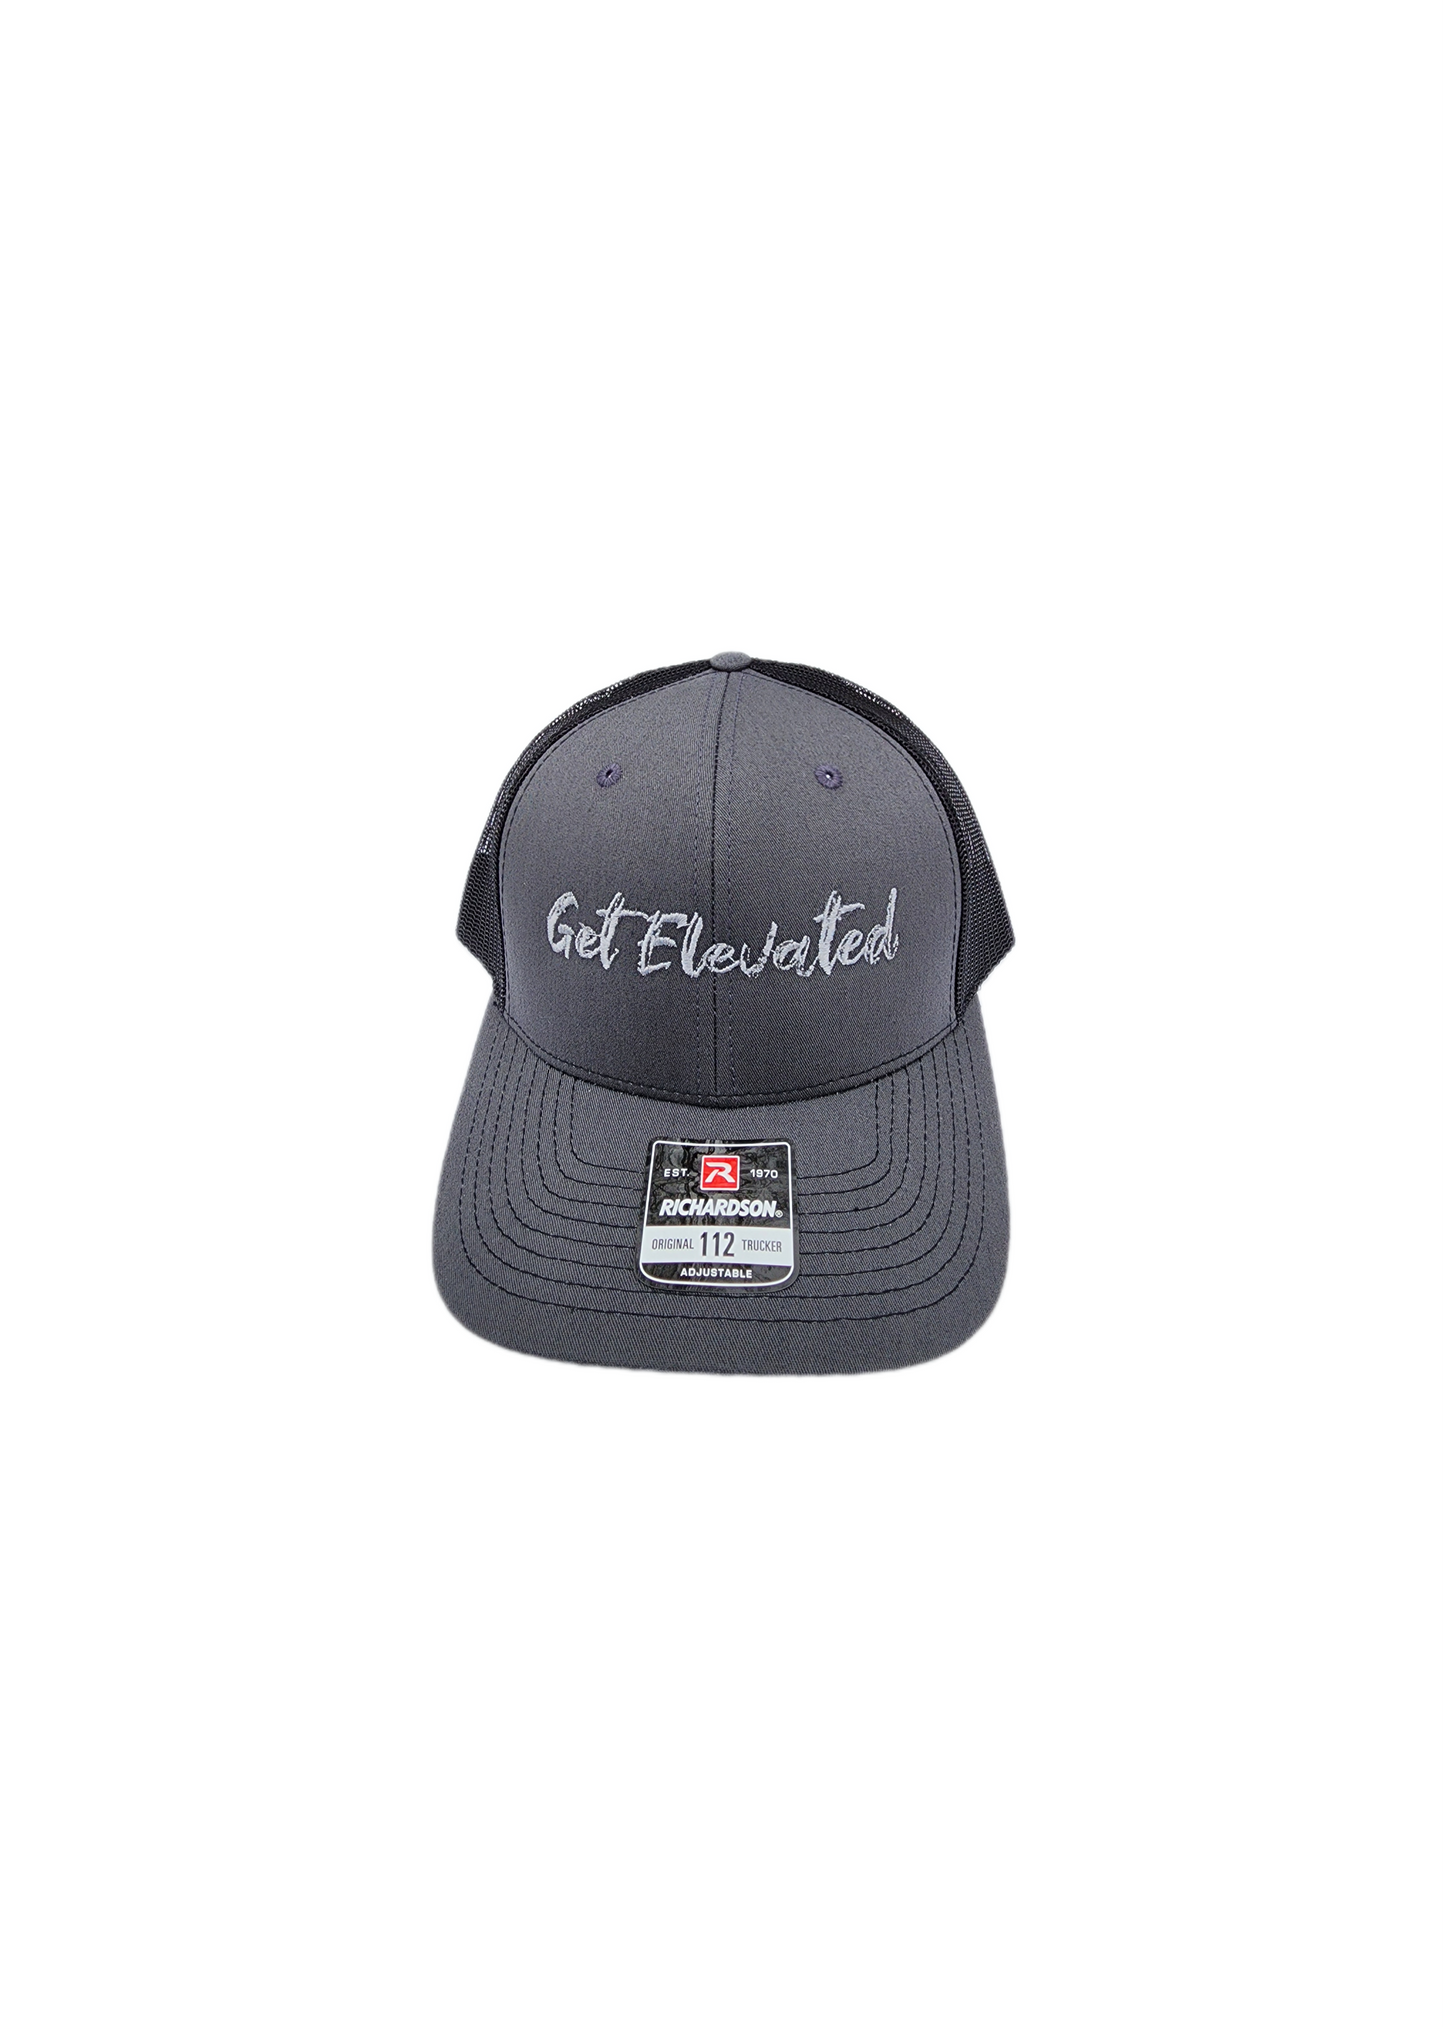 Trucker Hat Black & Gray Get Elevated